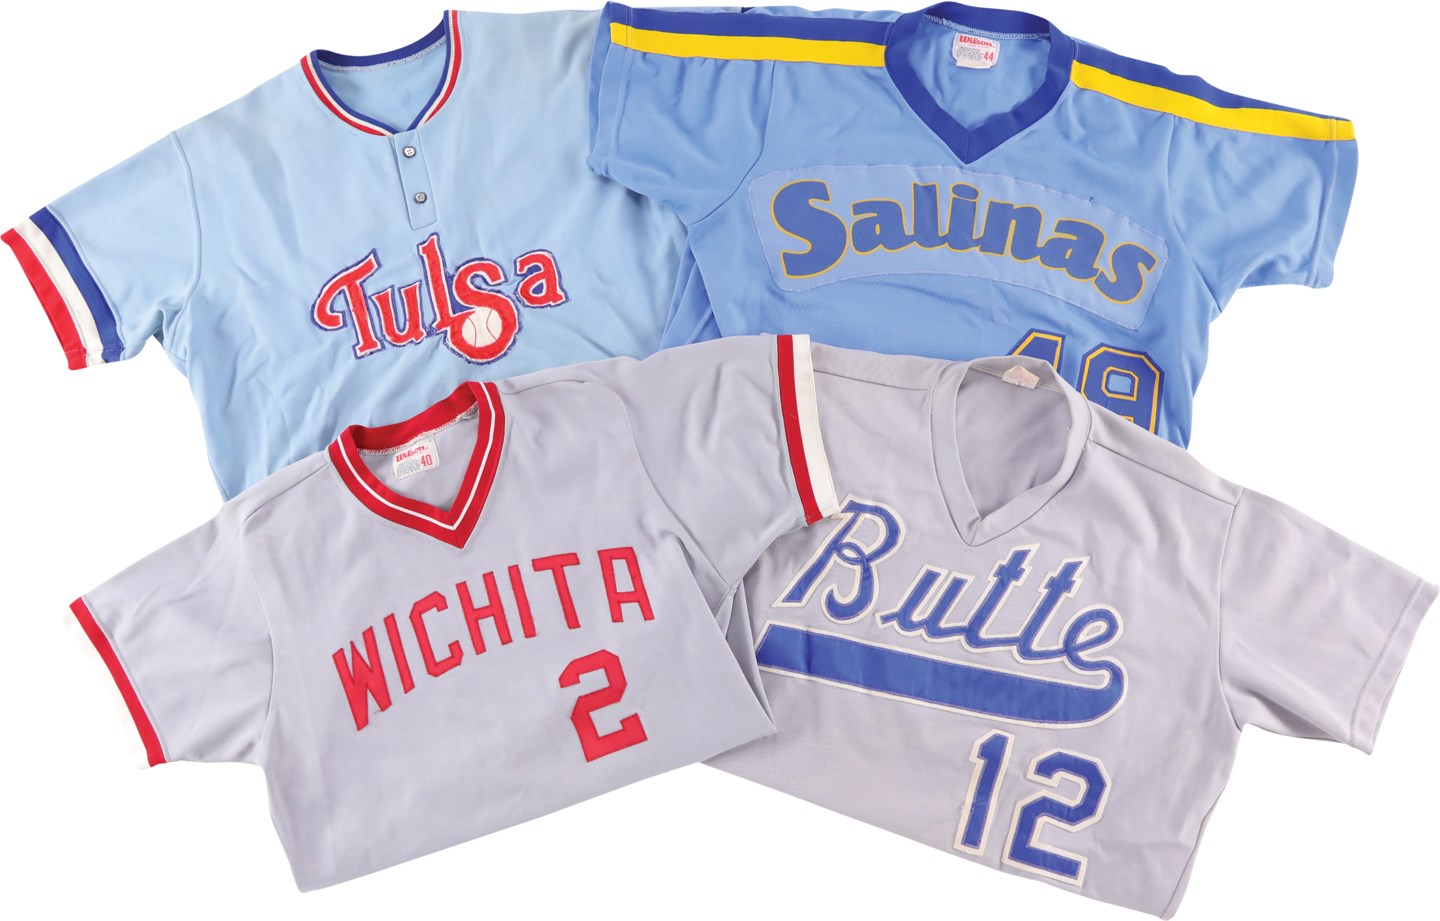 Baseball Equipment - Minor League Baseball Jerseys Full Styles (4)